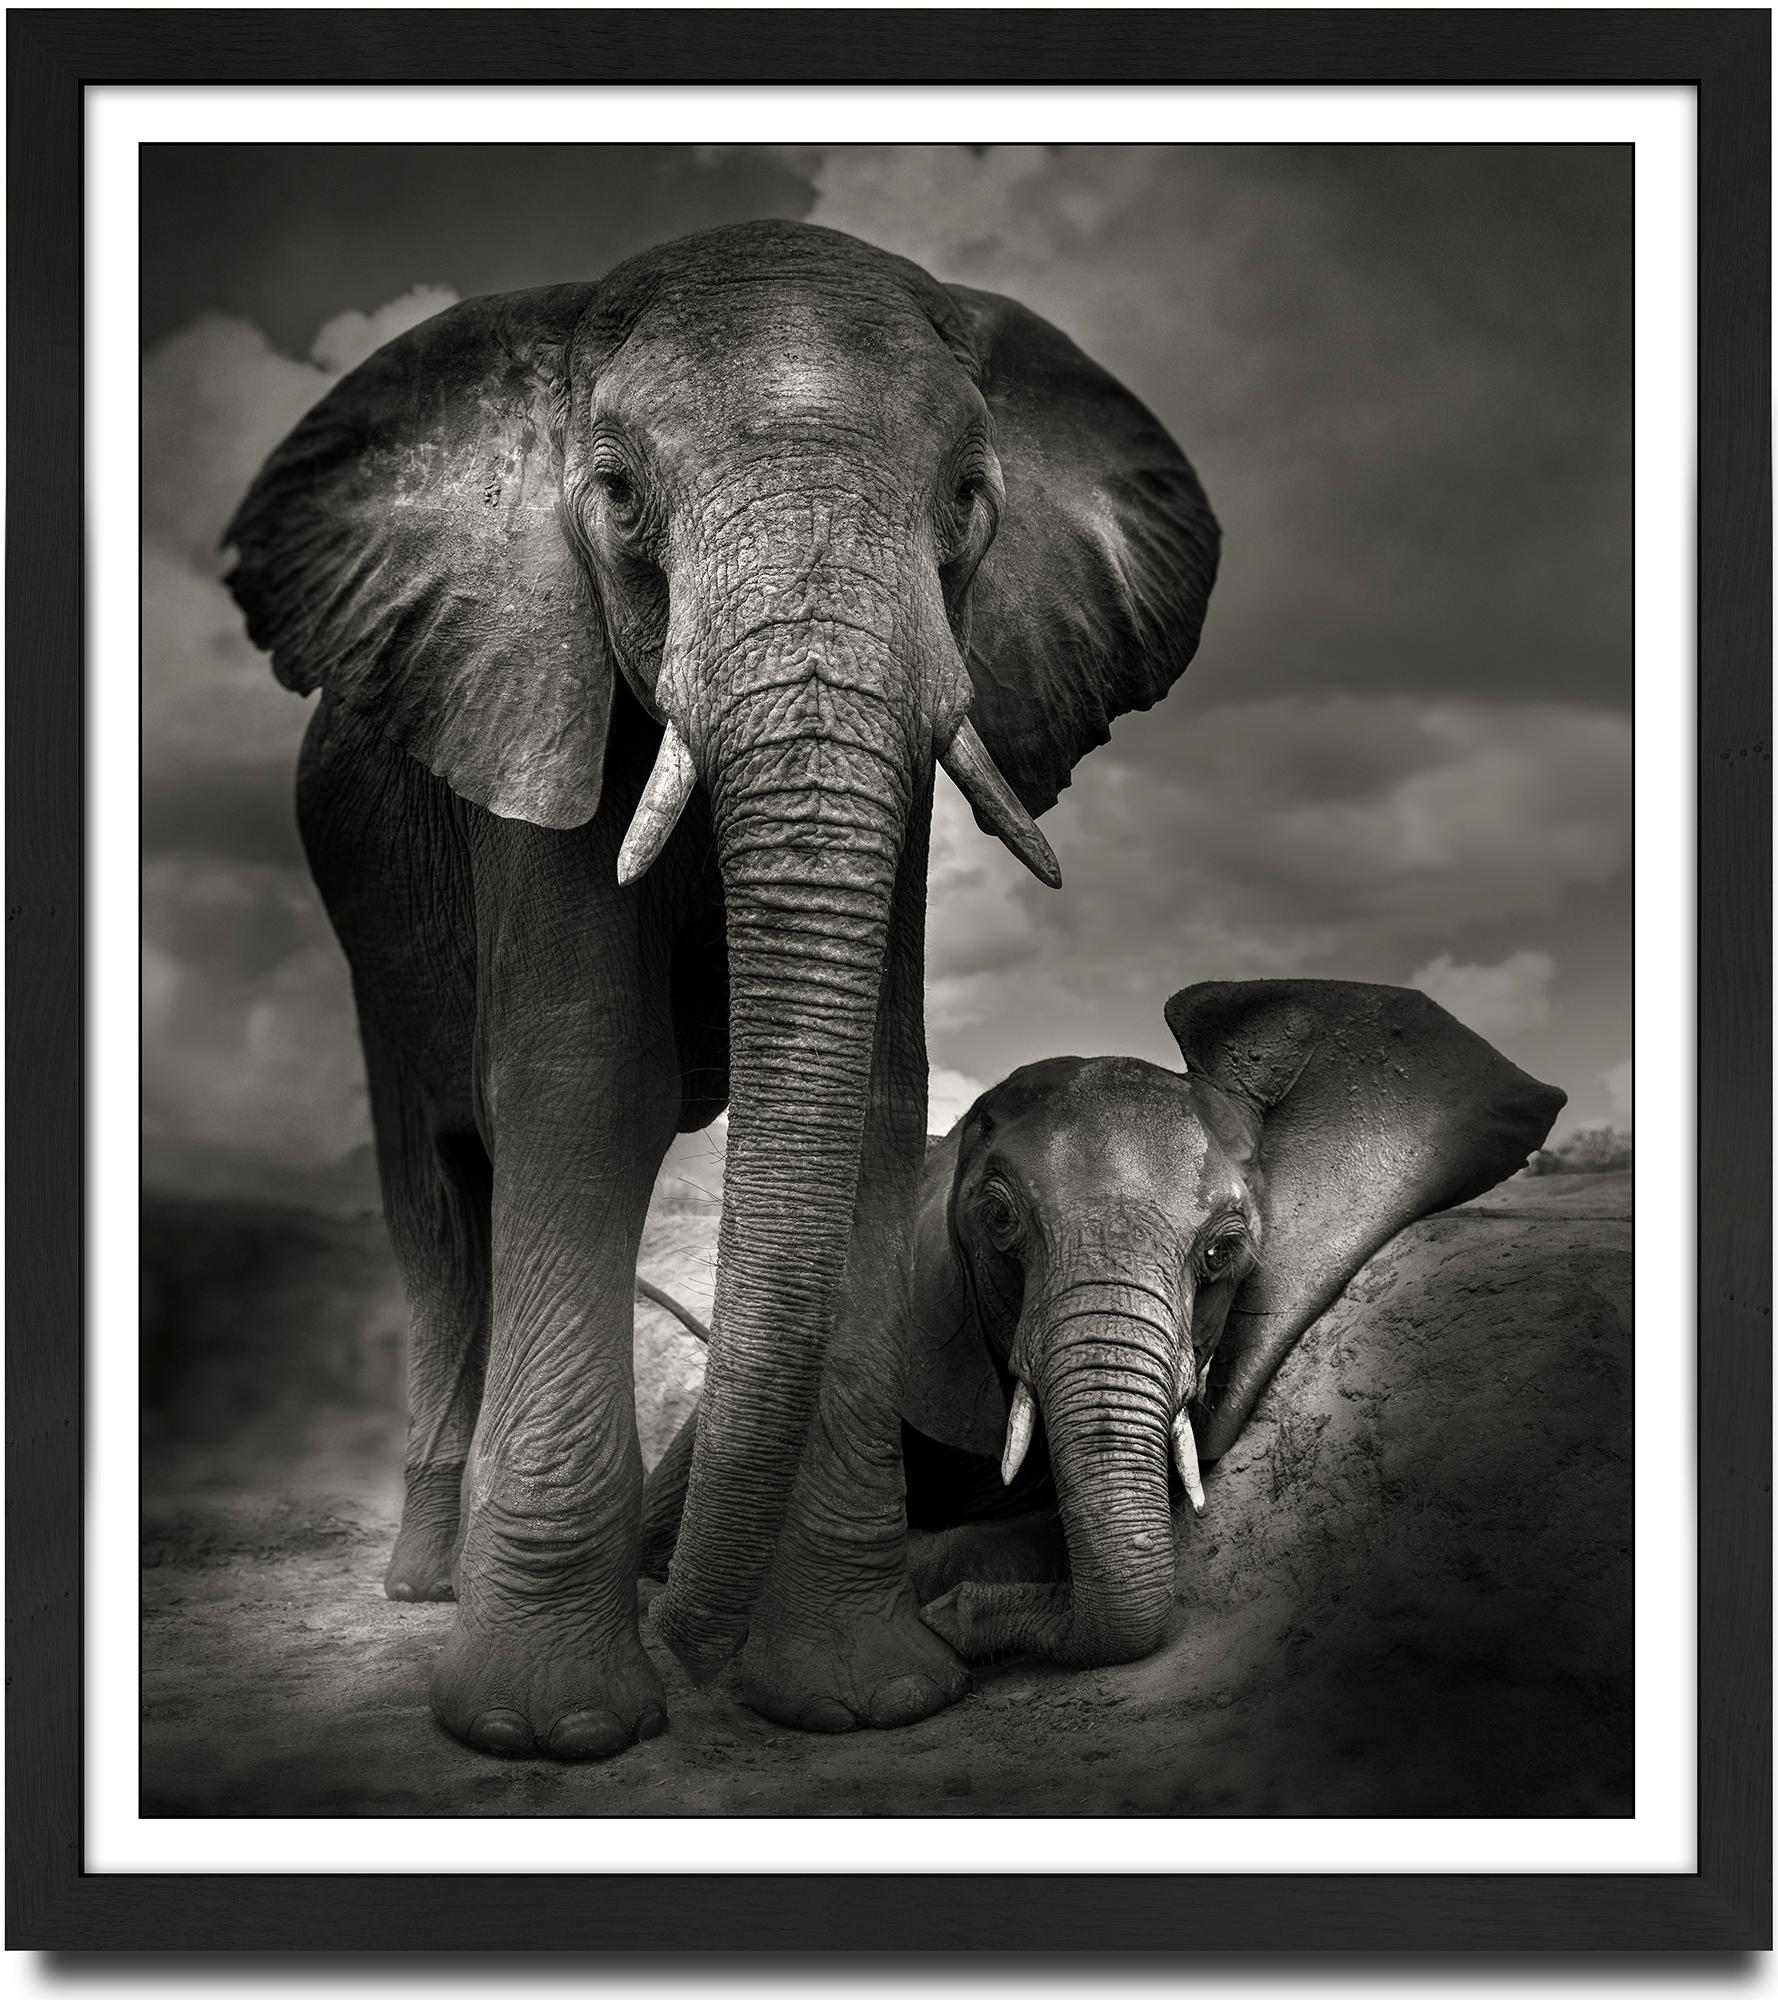 Best buddies, animal, wildlife, black and white photography, elephant, africa - Photograph by Joachim Schmeisser